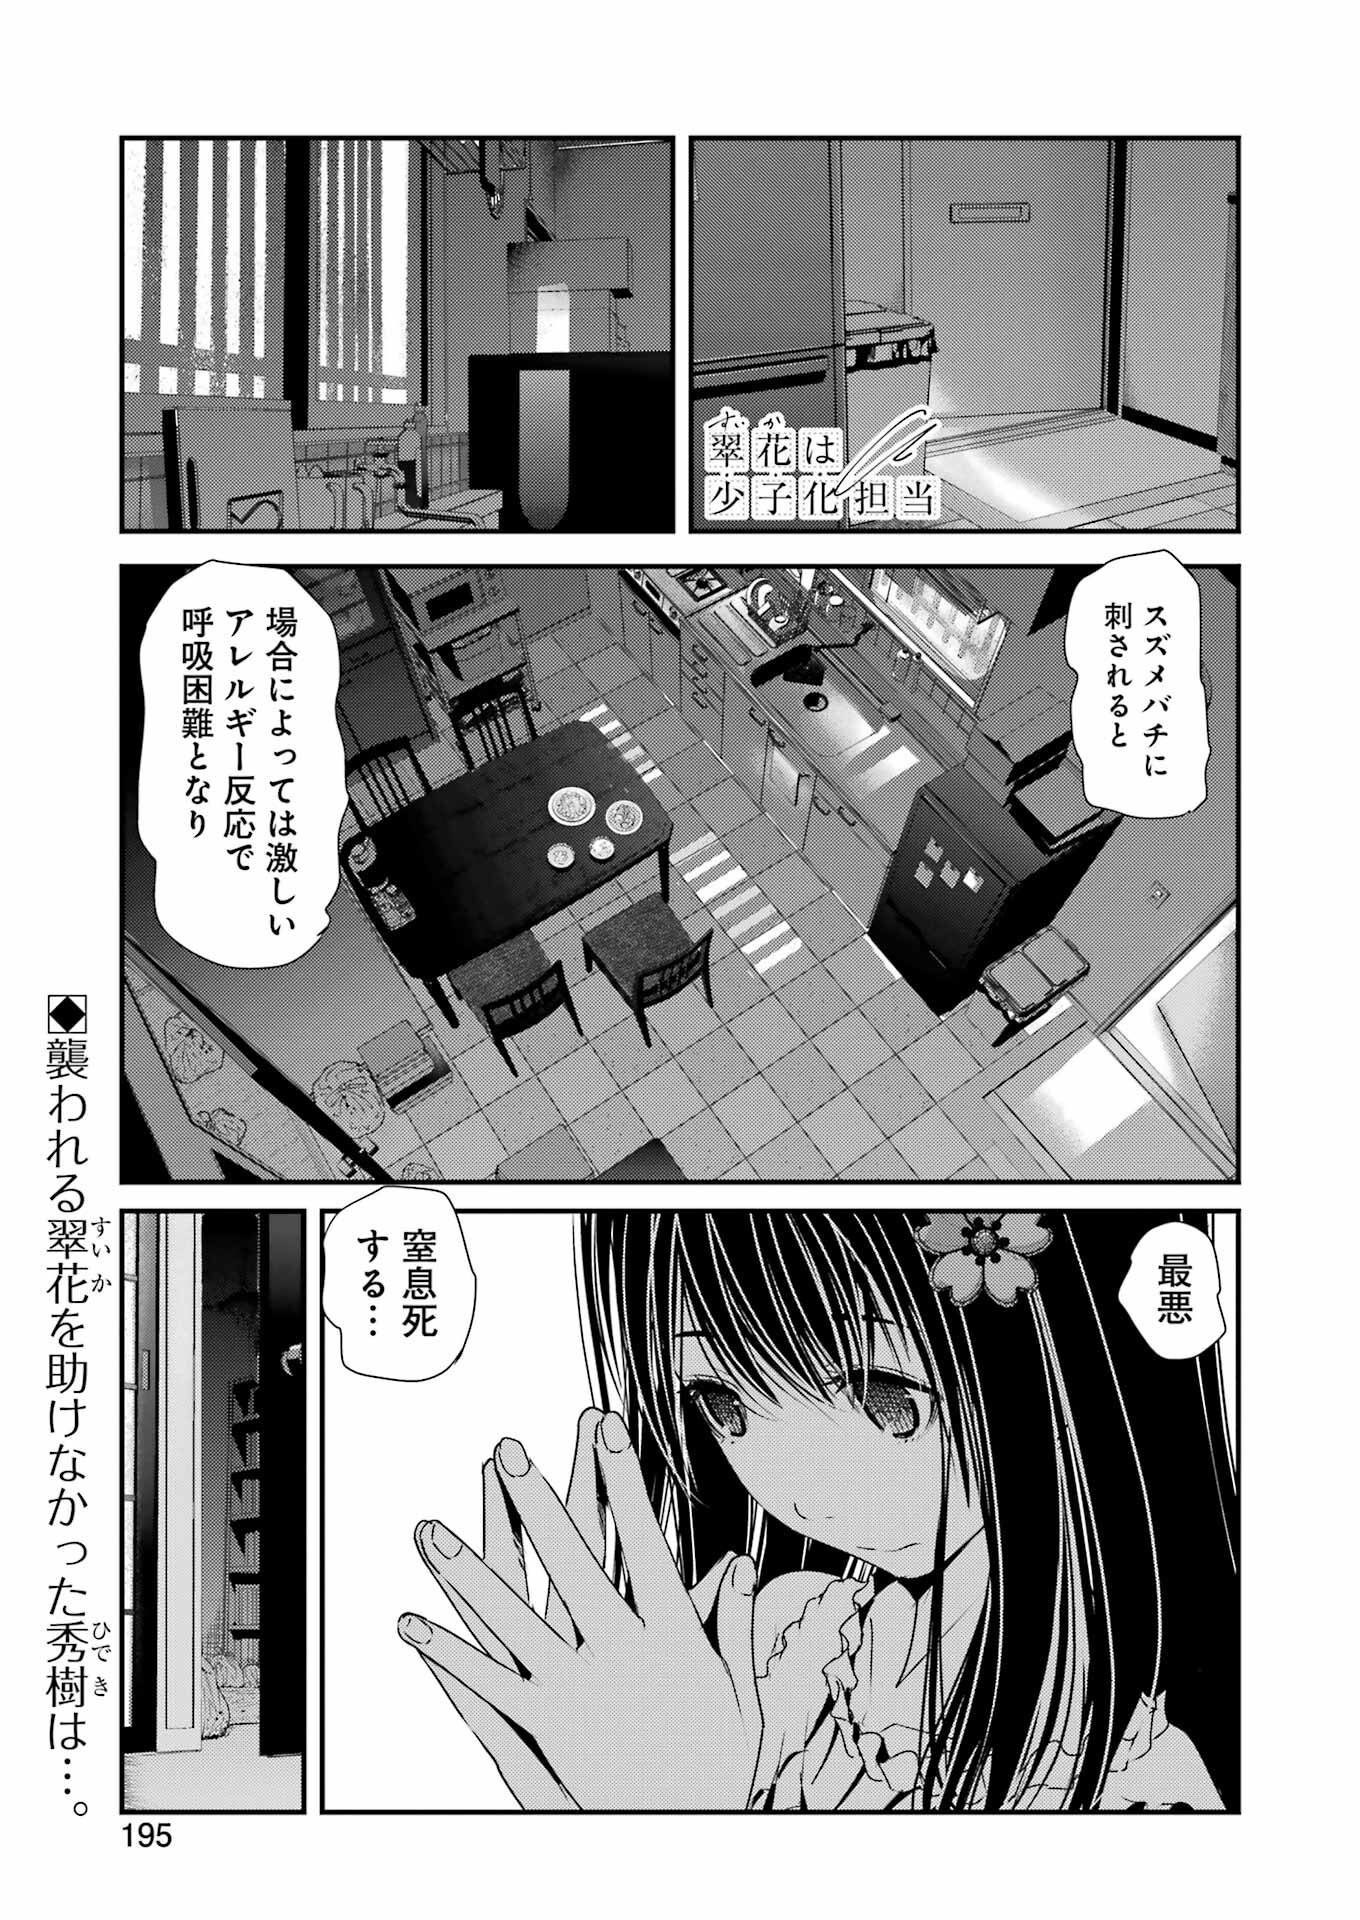 Suika wa Shoushika Tantou - Chapter 7 - Page 1